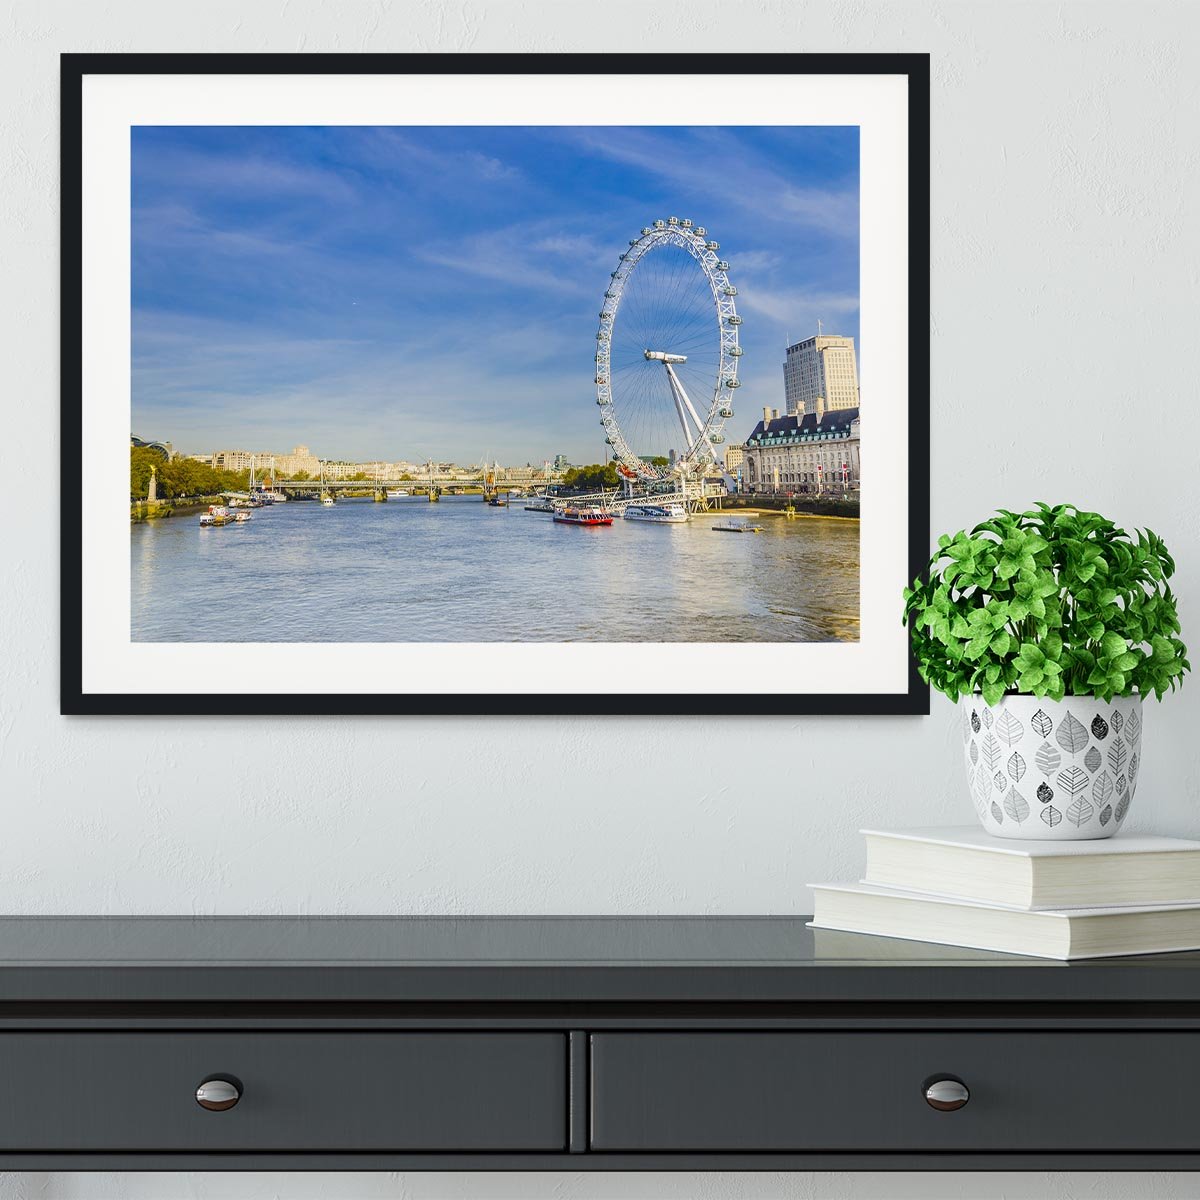 morning with London eye millennium wheel Framed Print - Canvas Art Rocks - 1